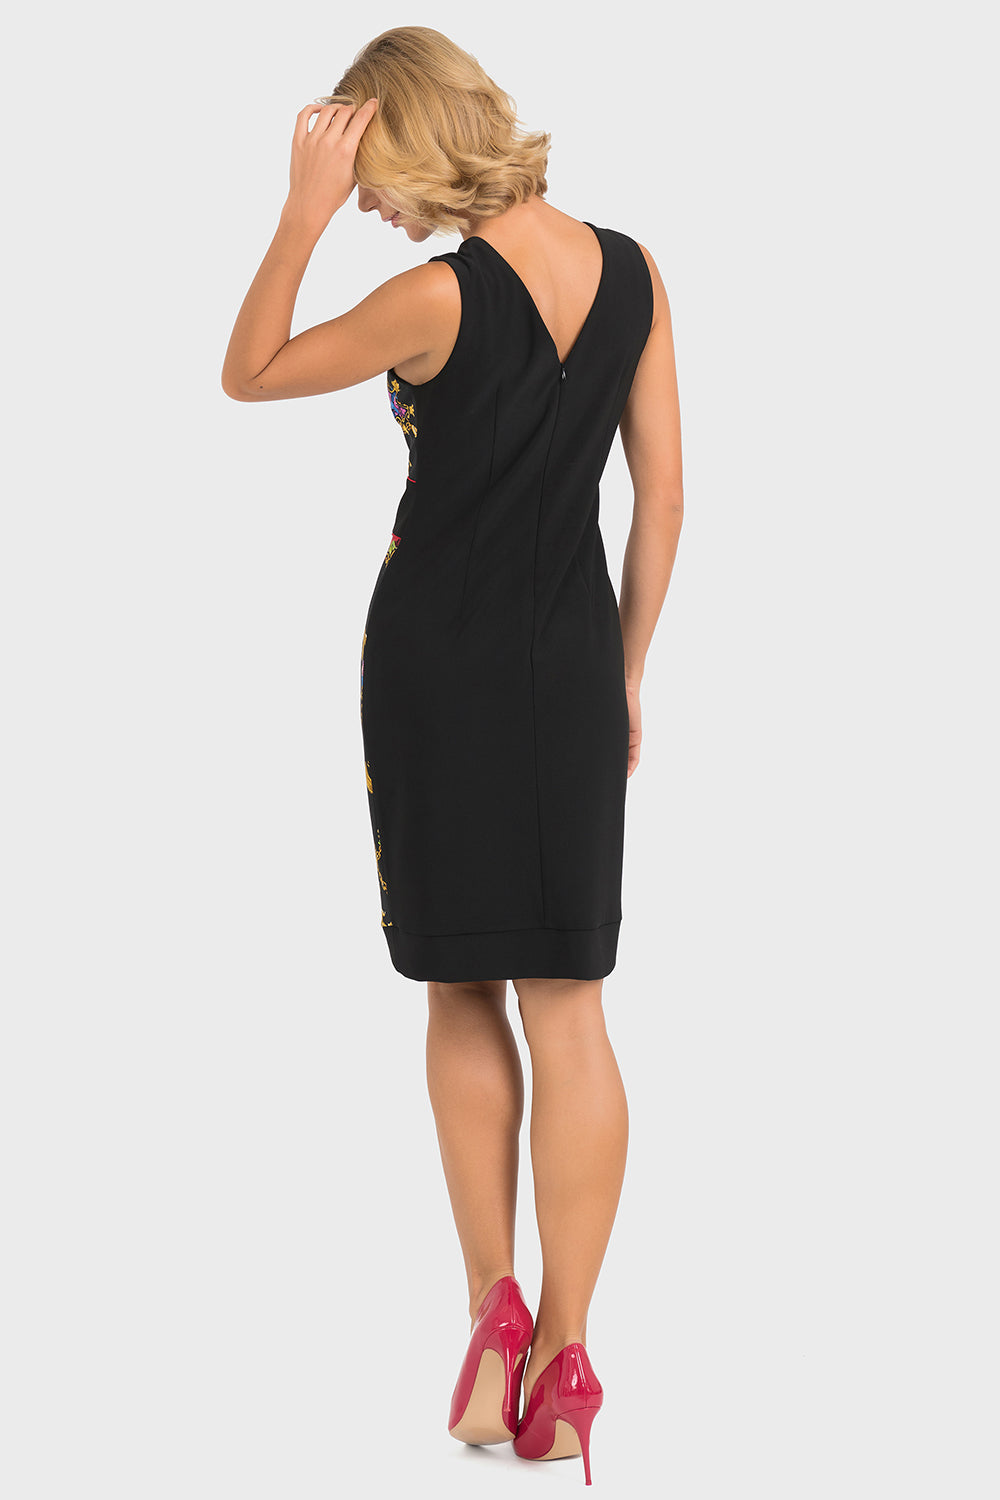 Joseph Ribkoff Black-Multi Dress Style 193677